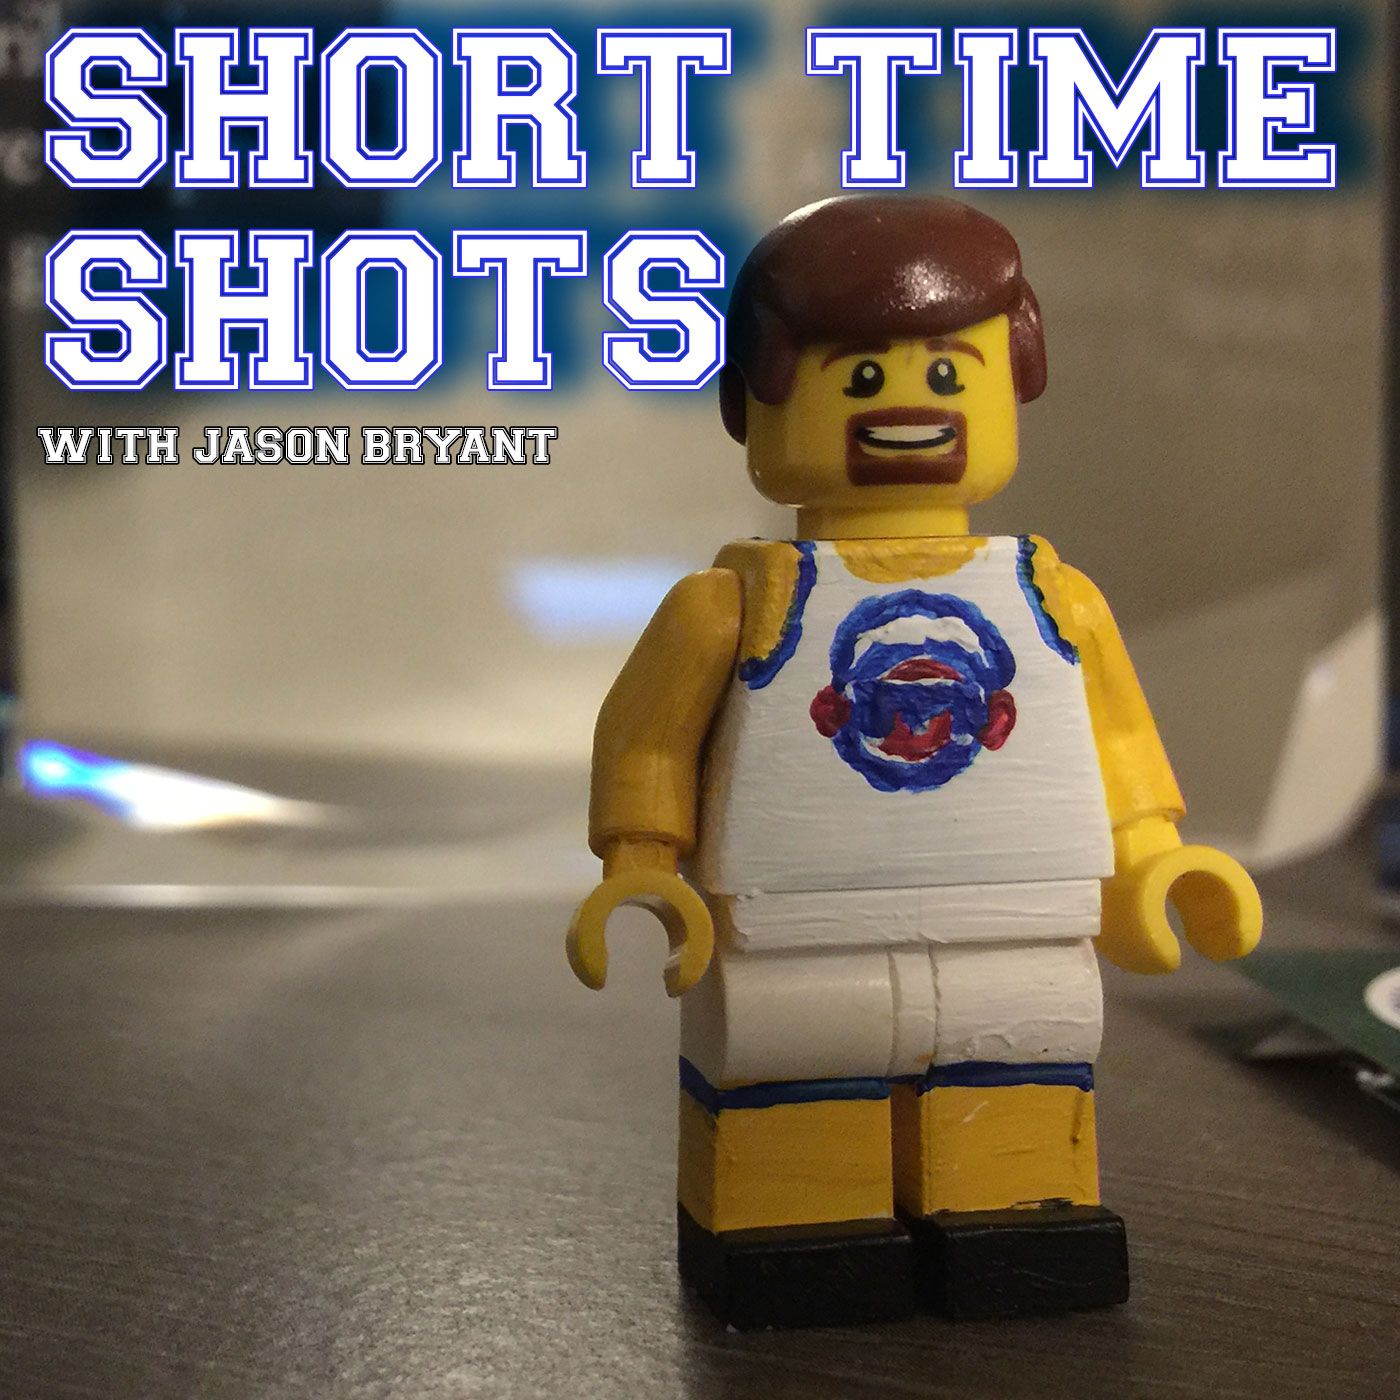 Short Time Shots: October 11, 2023